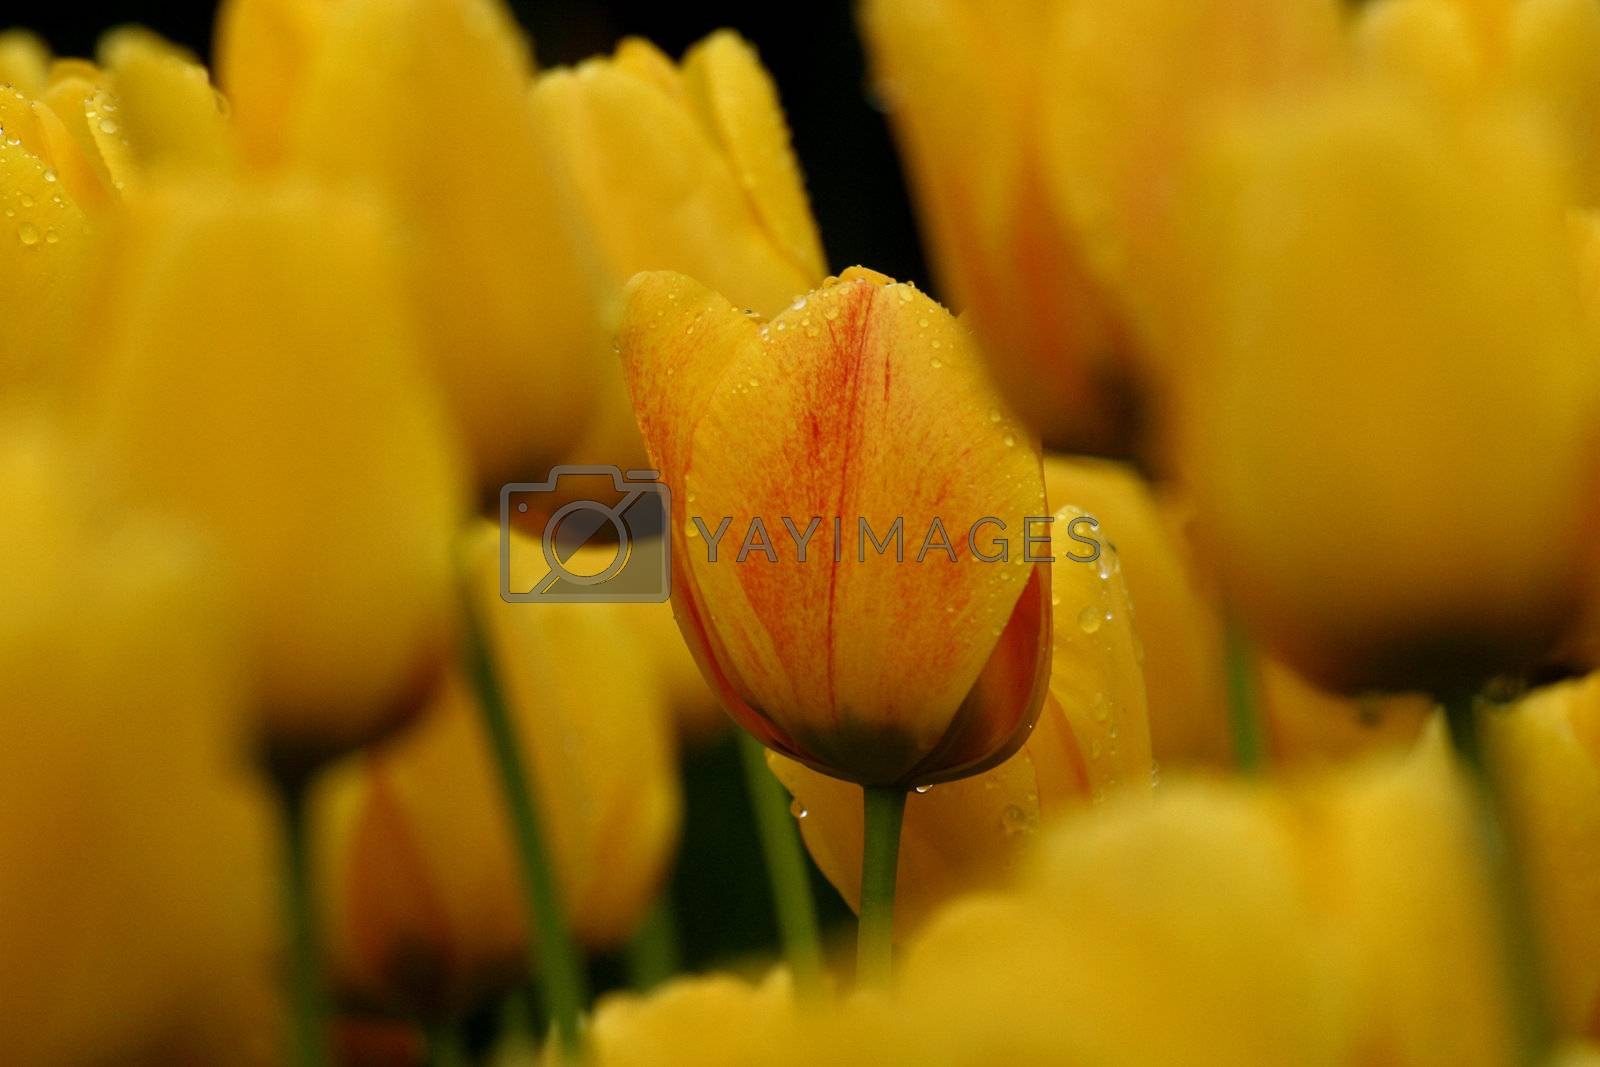 Royalty free image of Tulips in full bloom by atlas